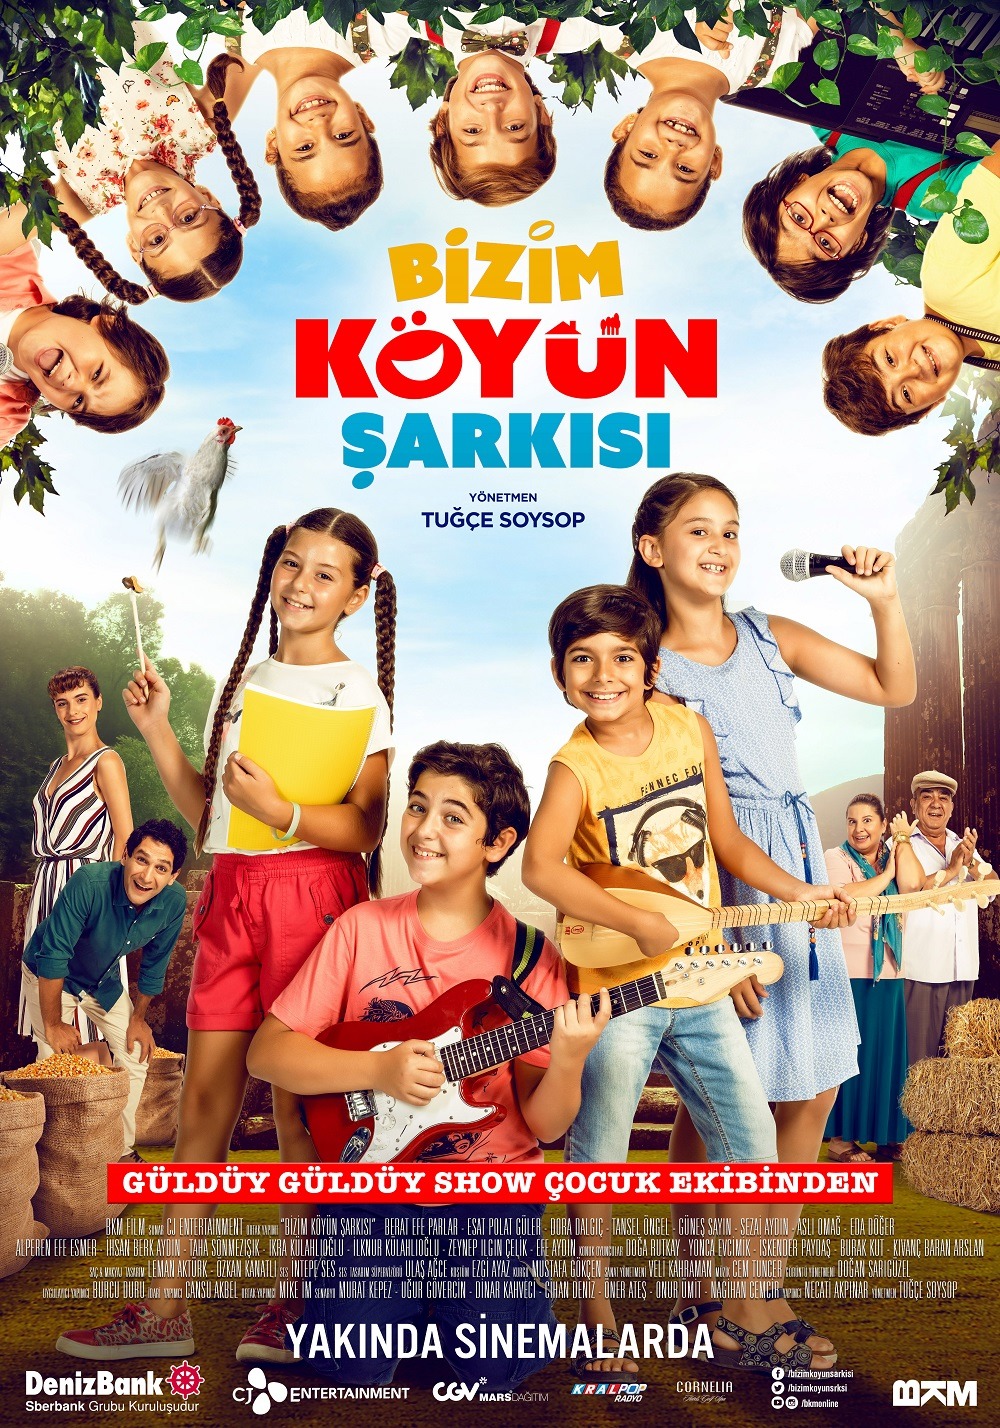 Extra Large Movie Poster Image for Bizim Köyün Sarkisi 